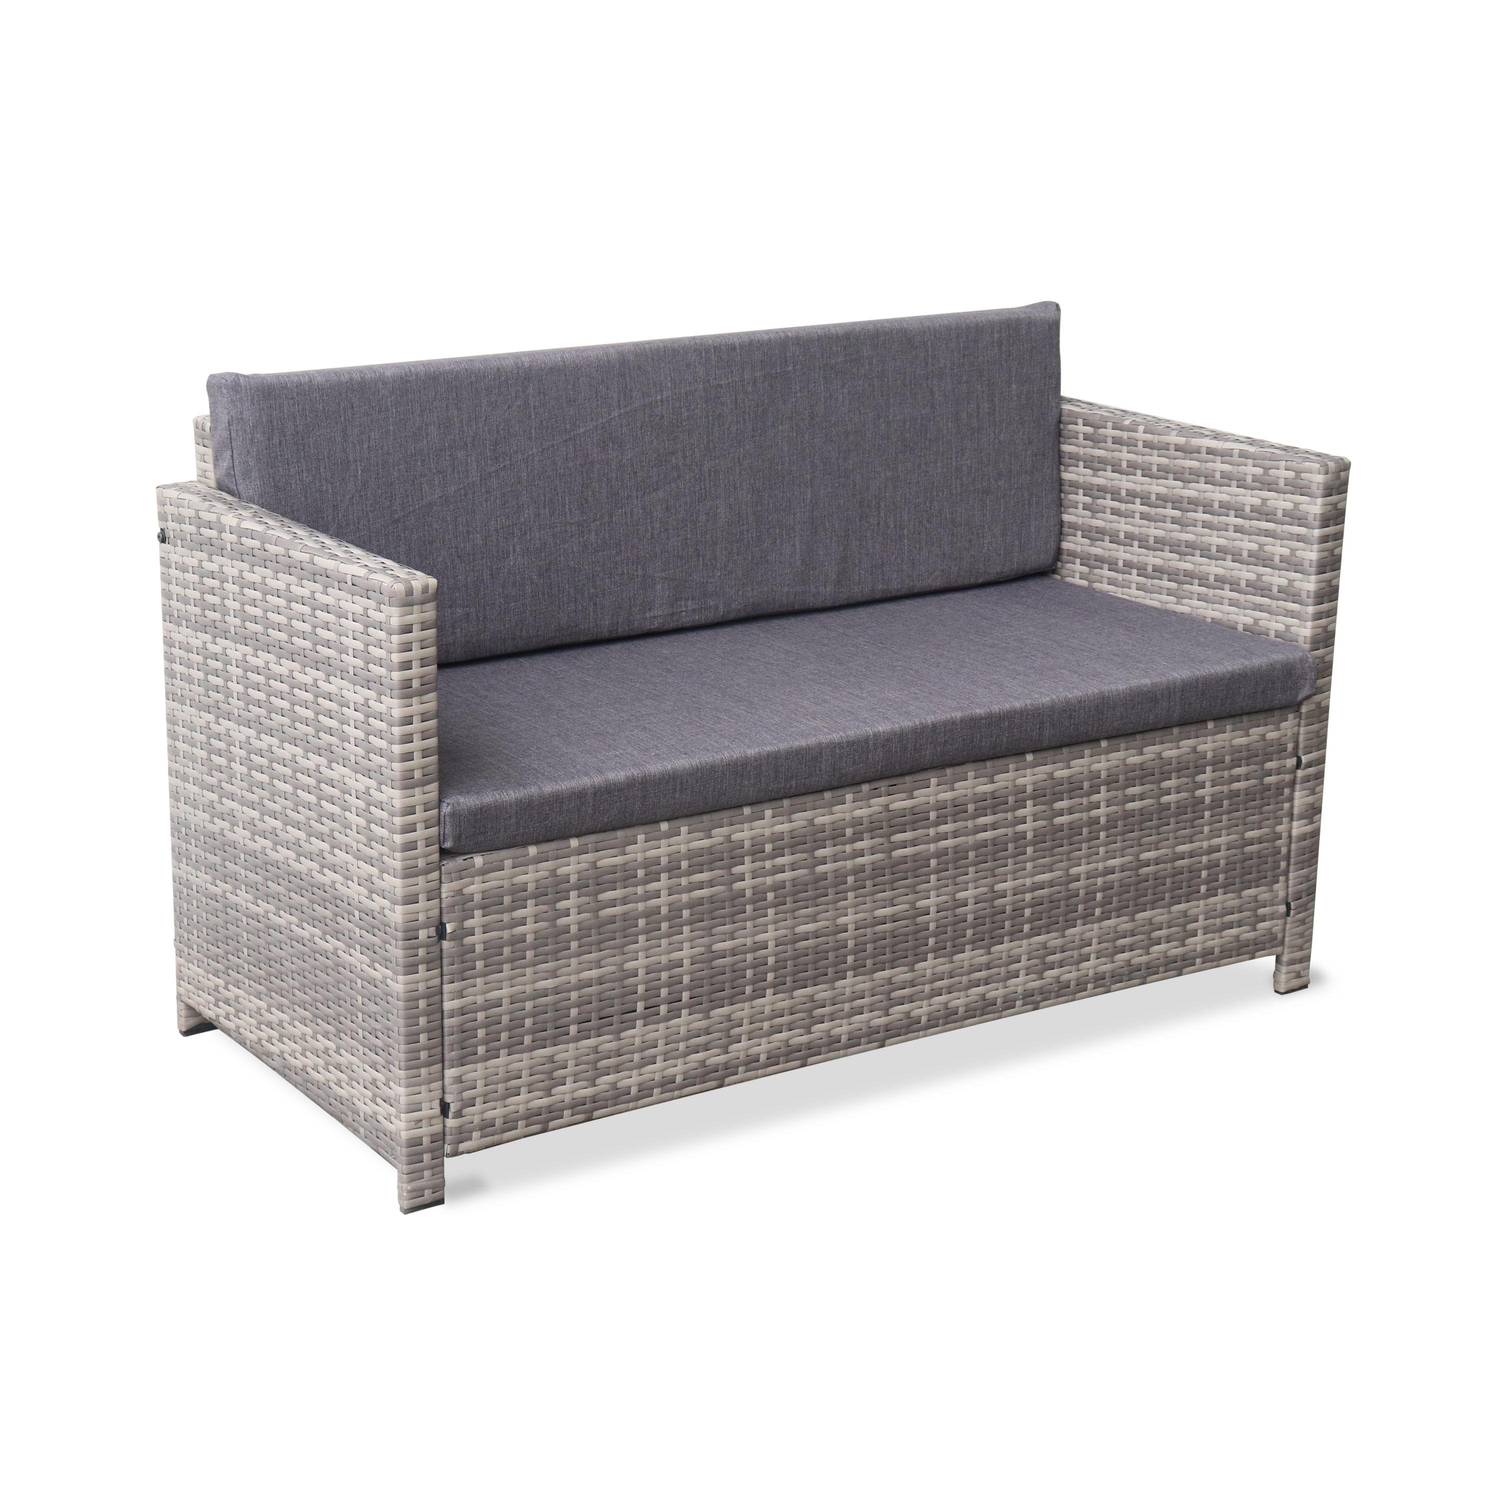 4-seater polyrattan garden sofa set - sofa, 2 armchairs, coffee table - Perugia - Mixed Grey rattan, Grey cushions Photo2